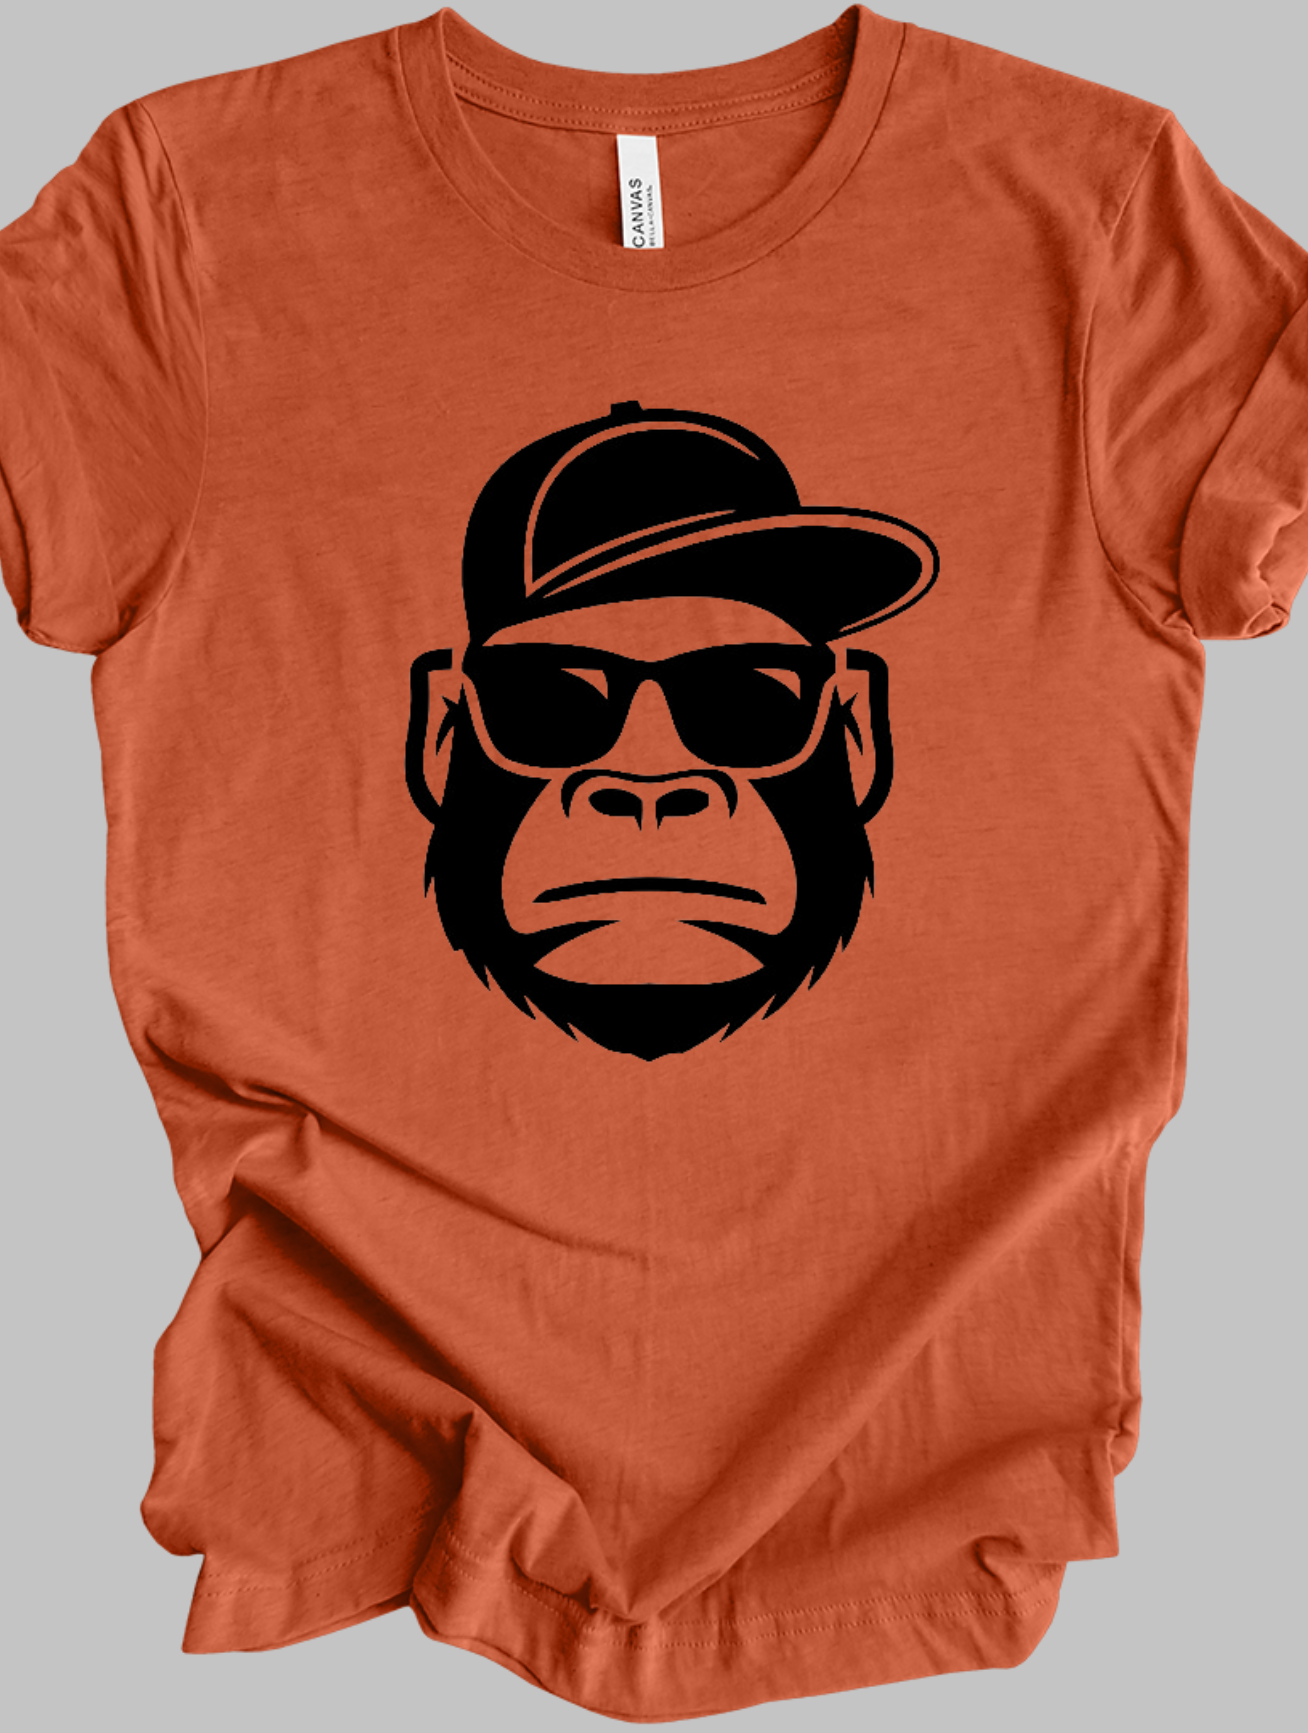 Gorilla with Sunglasses - Unisex T-shirt